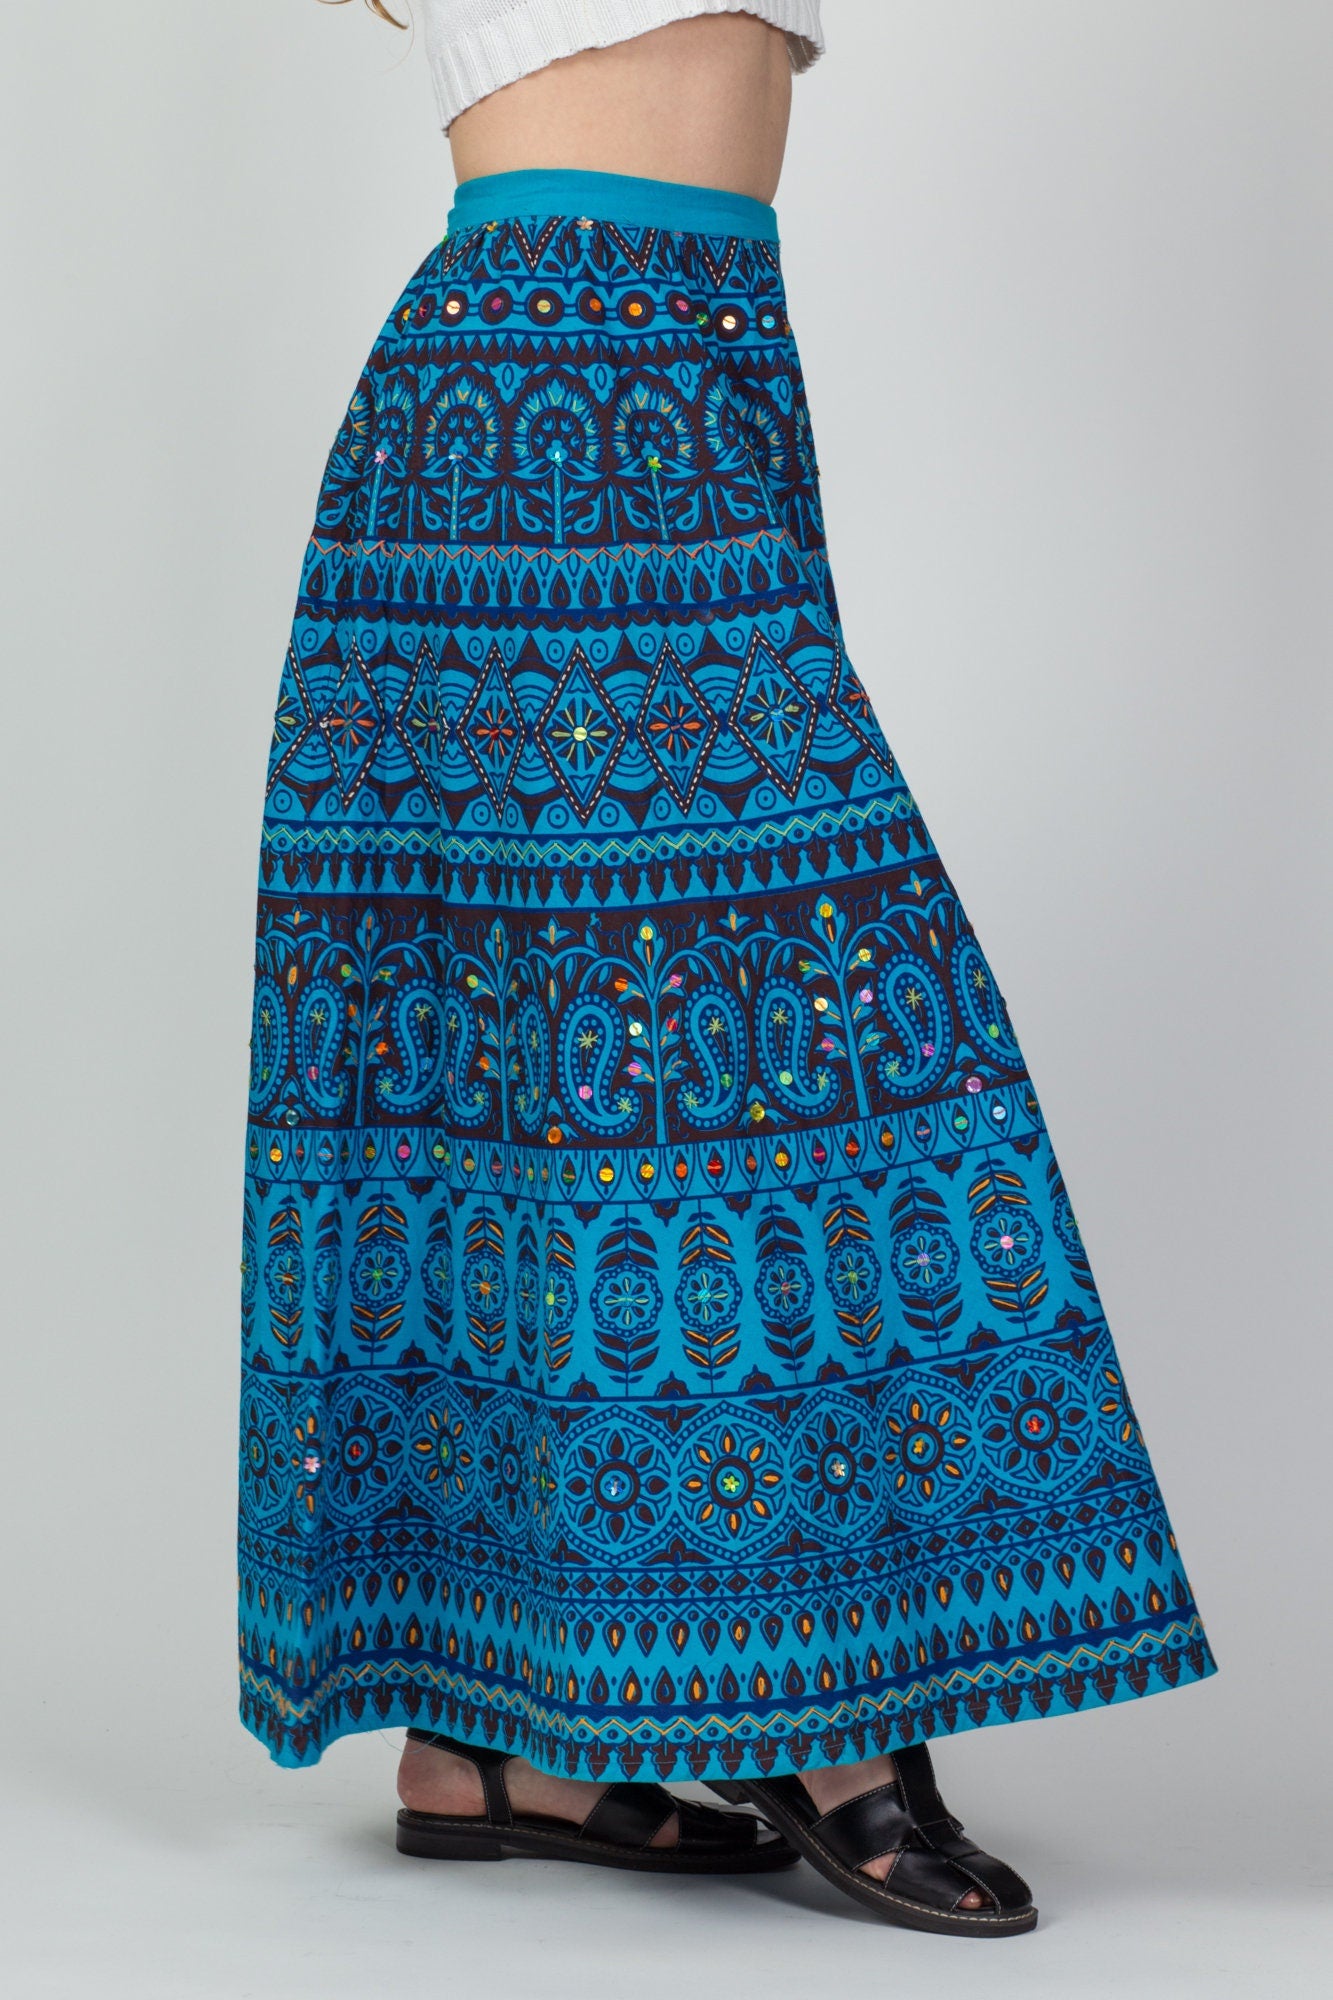 Vintage 70s Blue Indian Block Print Skirt - Small to Medium 